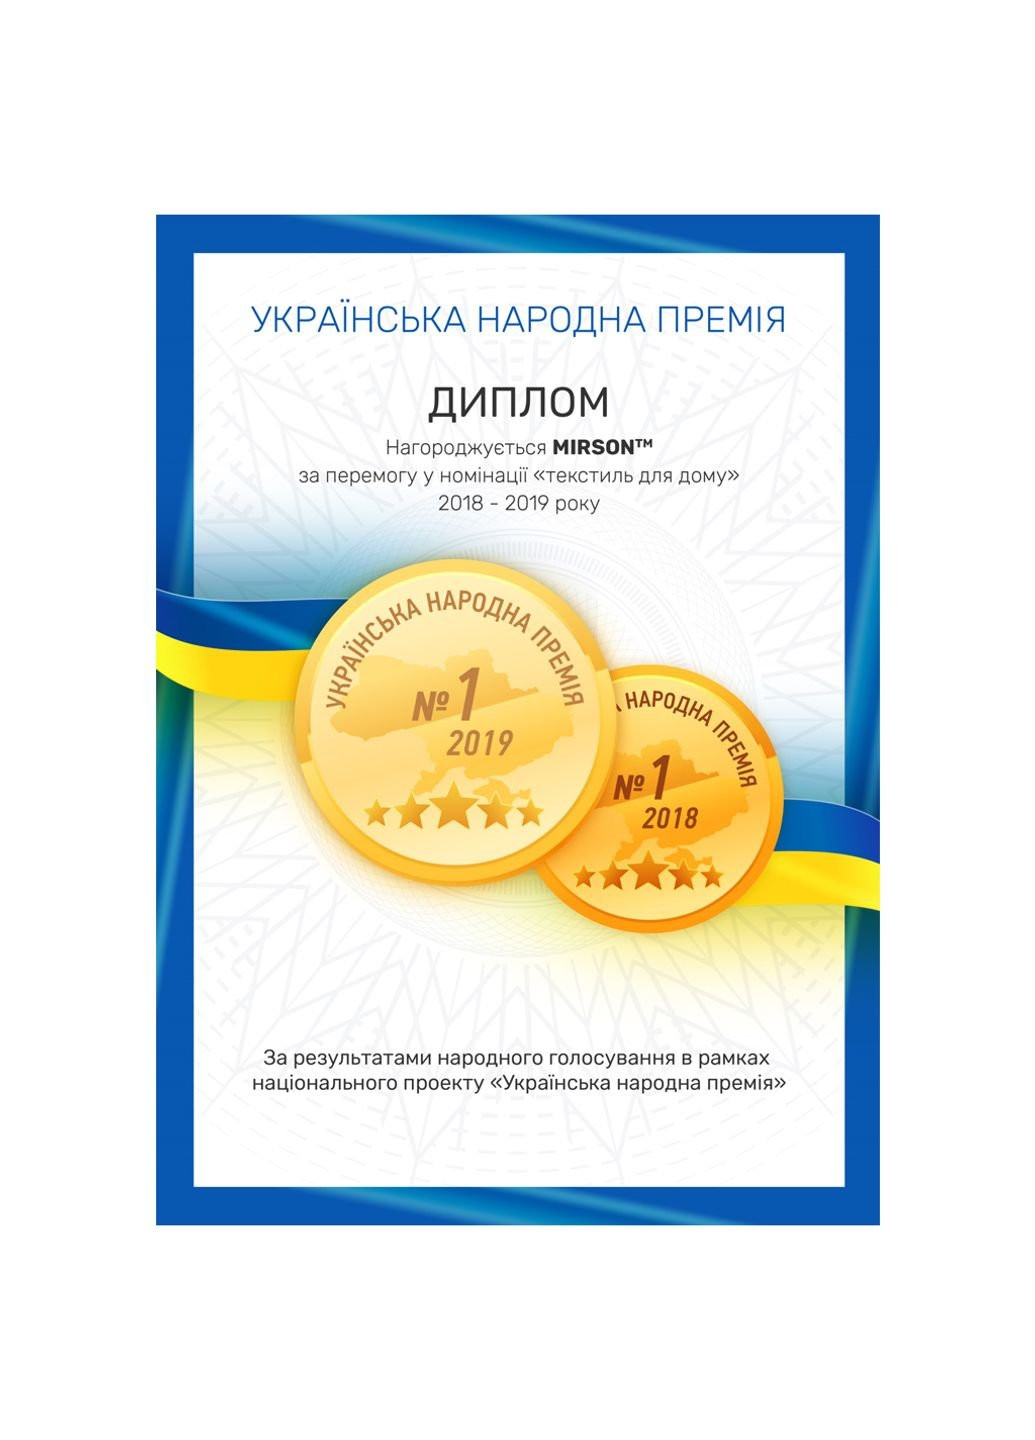 Mirson полотенце банное №5001 softness brown 40x70 см (2200003181517) коричневый производство - Украина